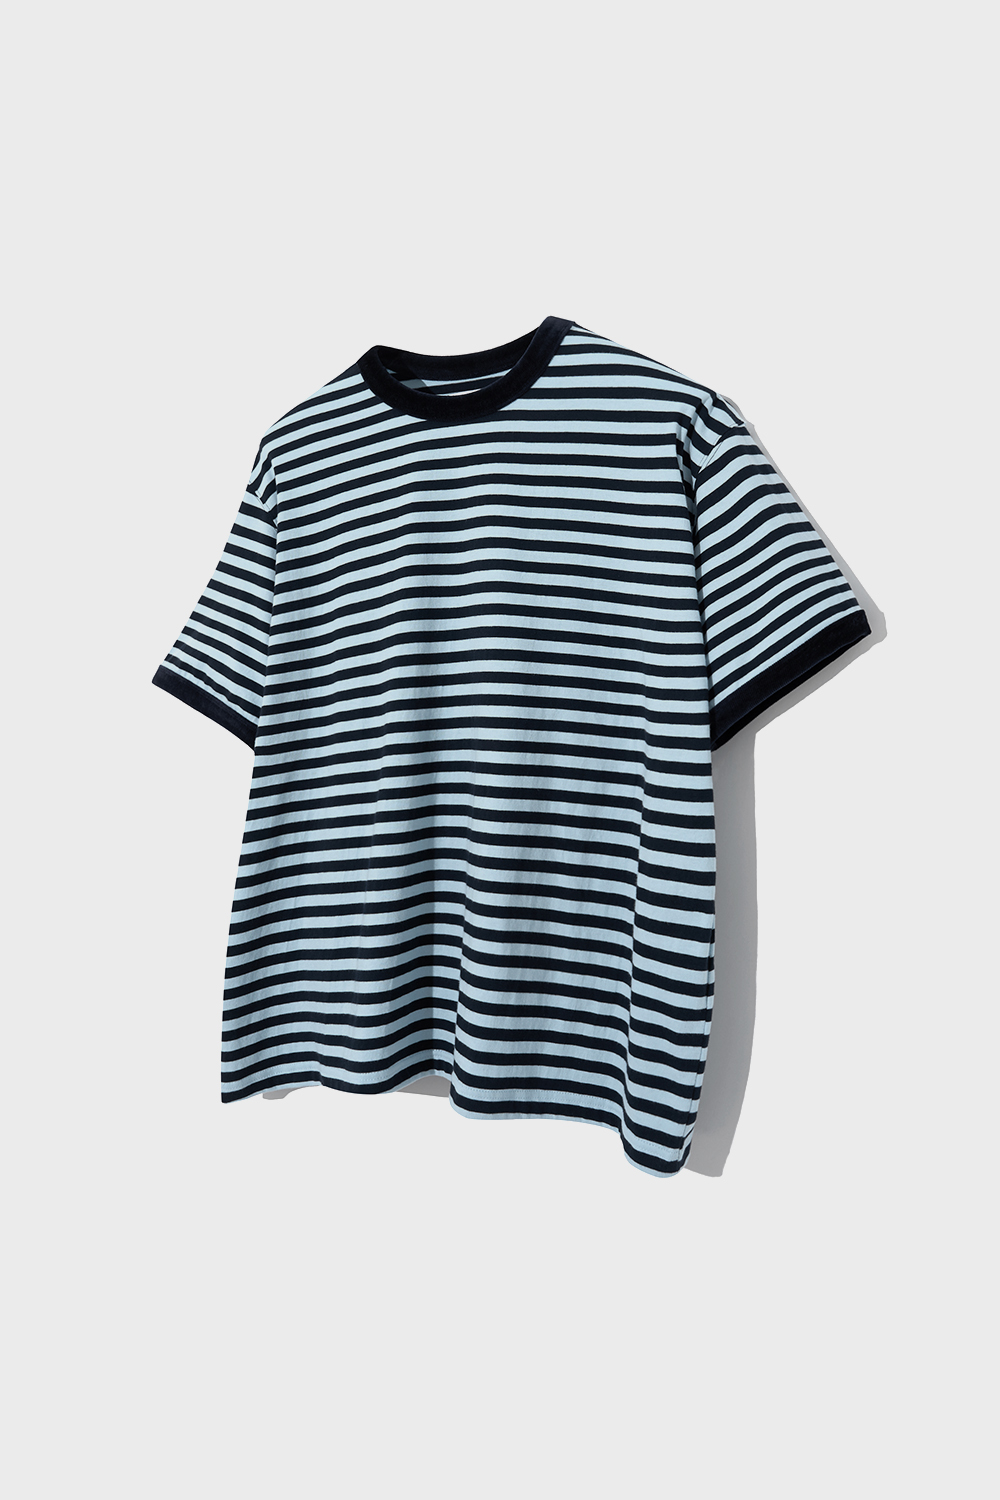 Velour Rib Stripe T-Shirts (Stripe Blue)